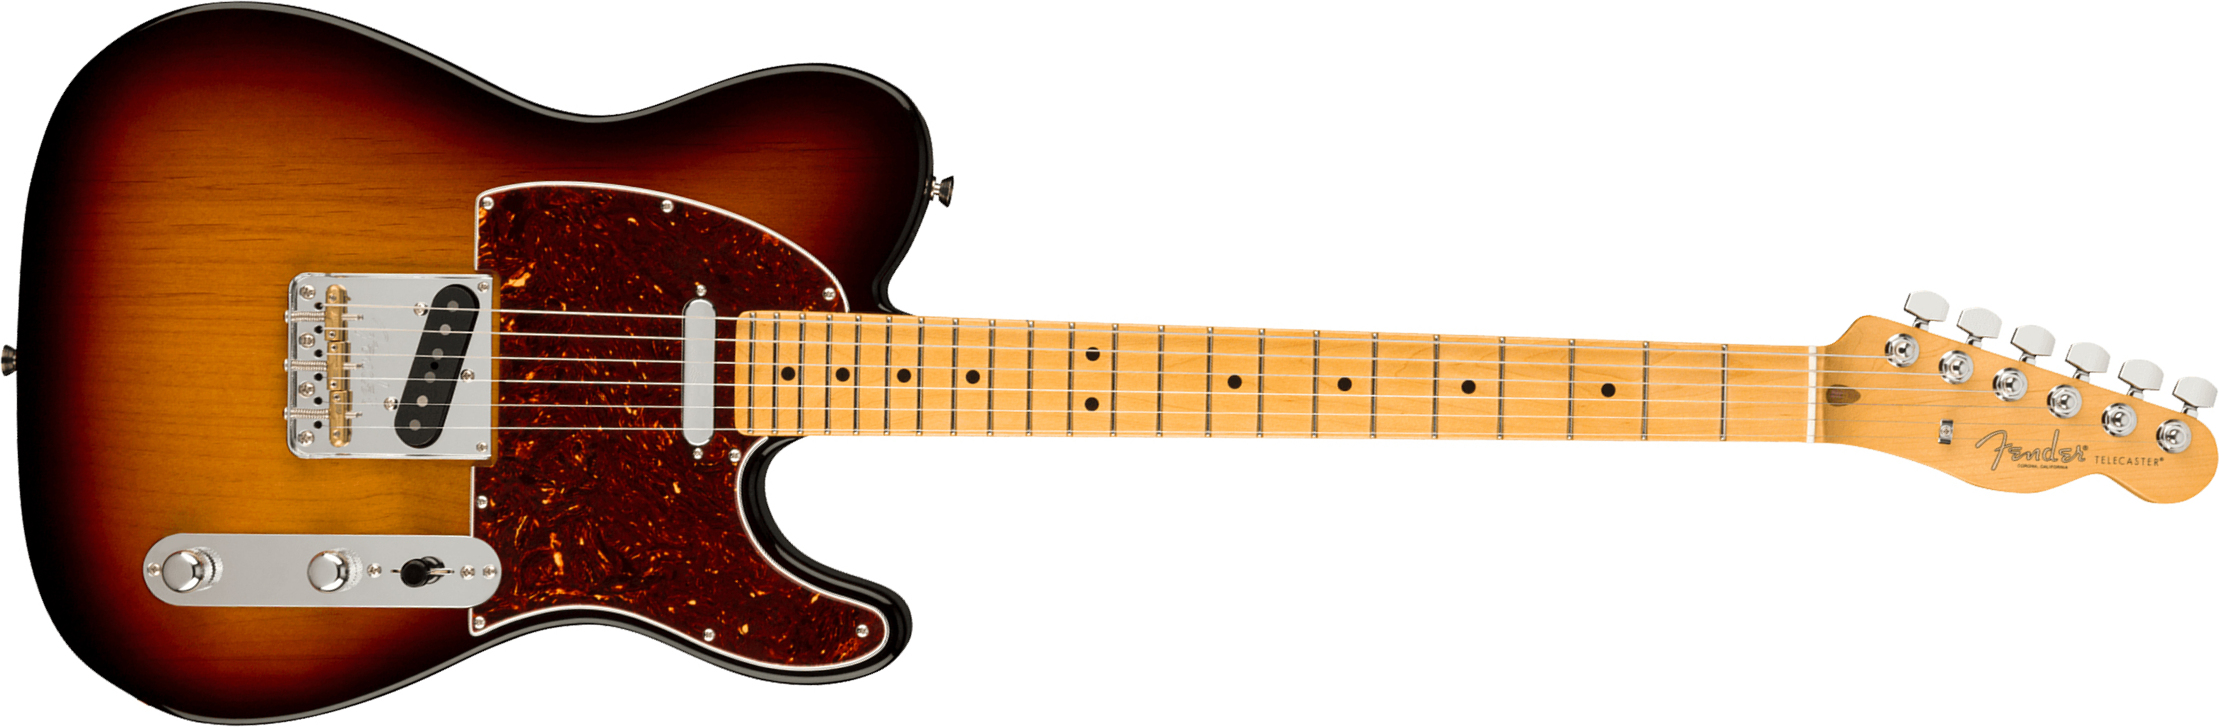 Fender Tele American Professional Ii Usa Mn - 3-color Sunburst - Tel shape electric guitar - Main picture